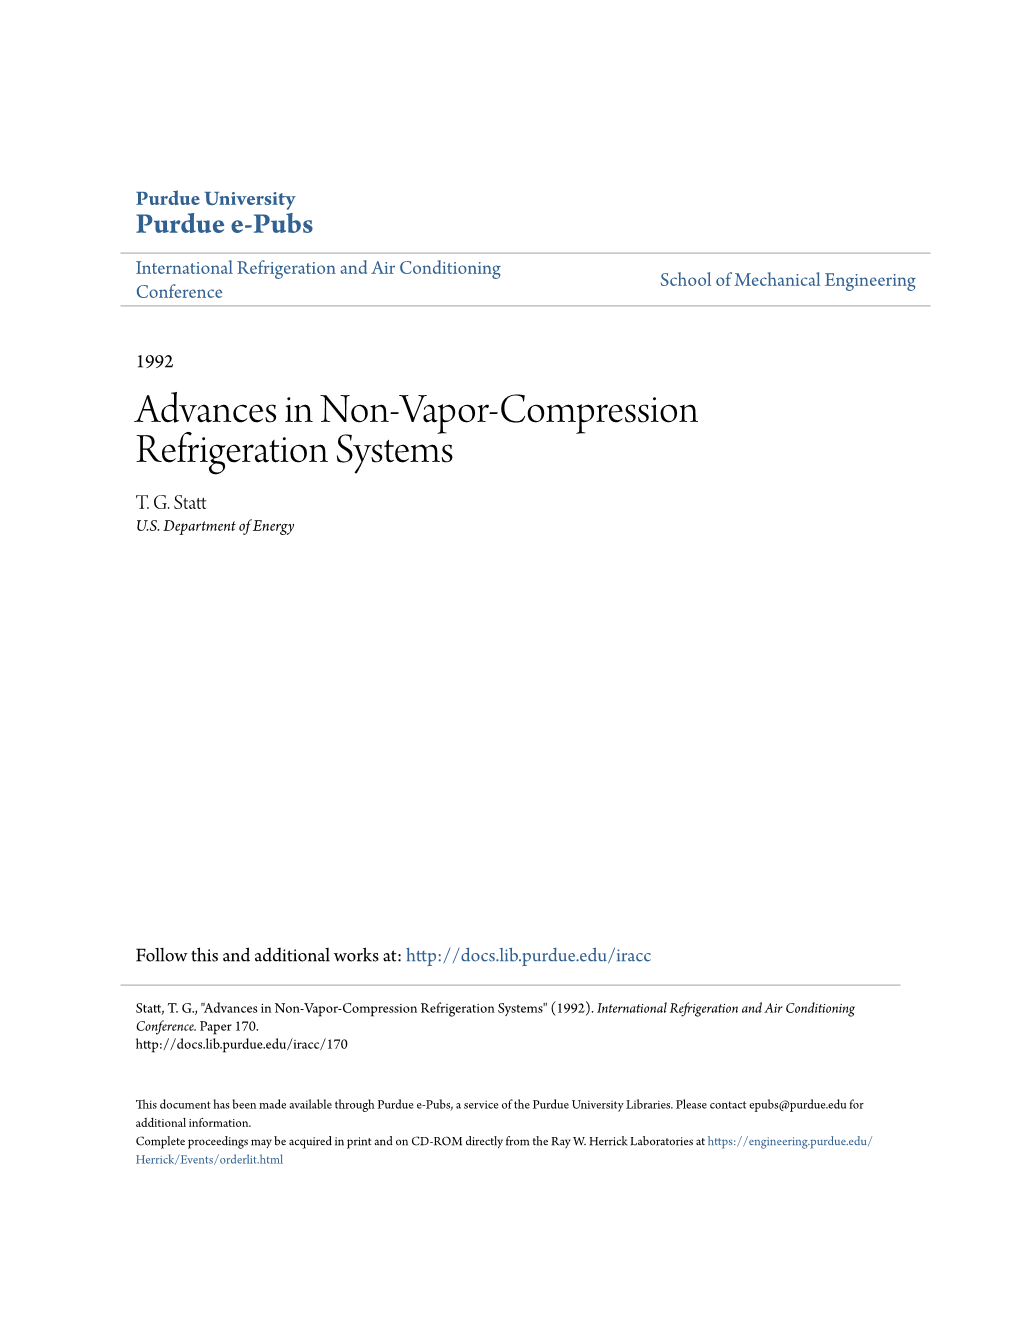 Advances in Non-Vapor-Compression Refrigeration Systems T